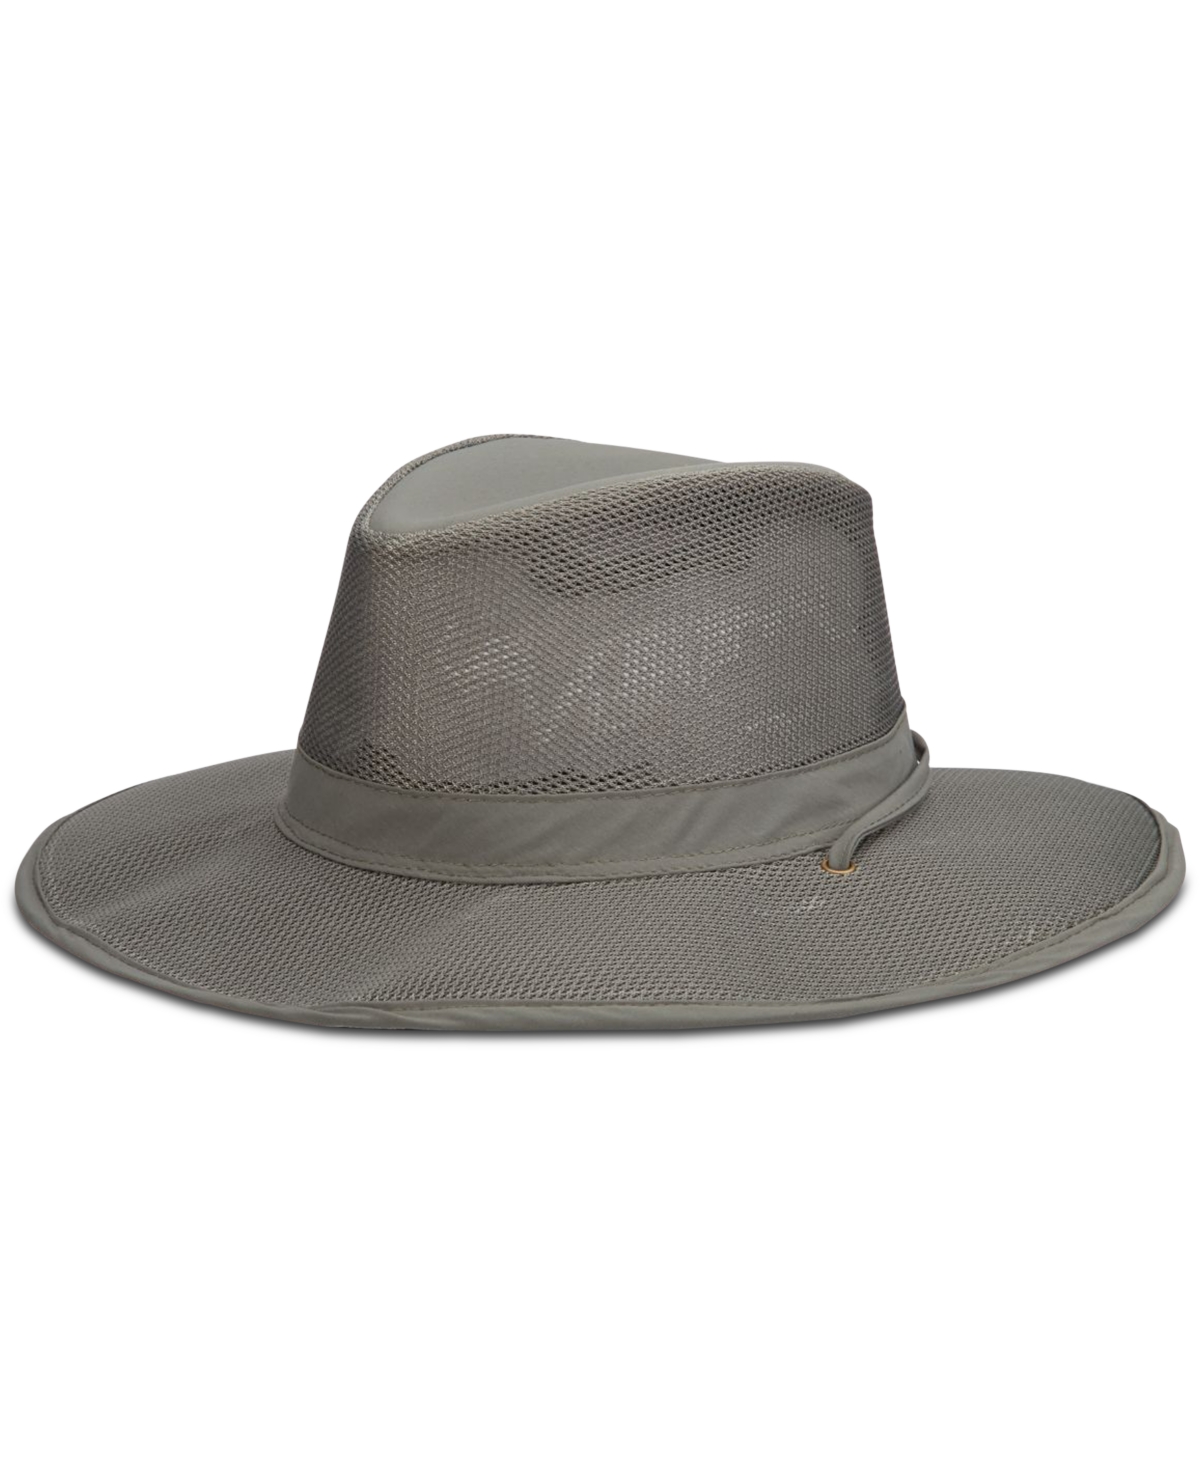 Men's Mesh Safari Hat - Khaki